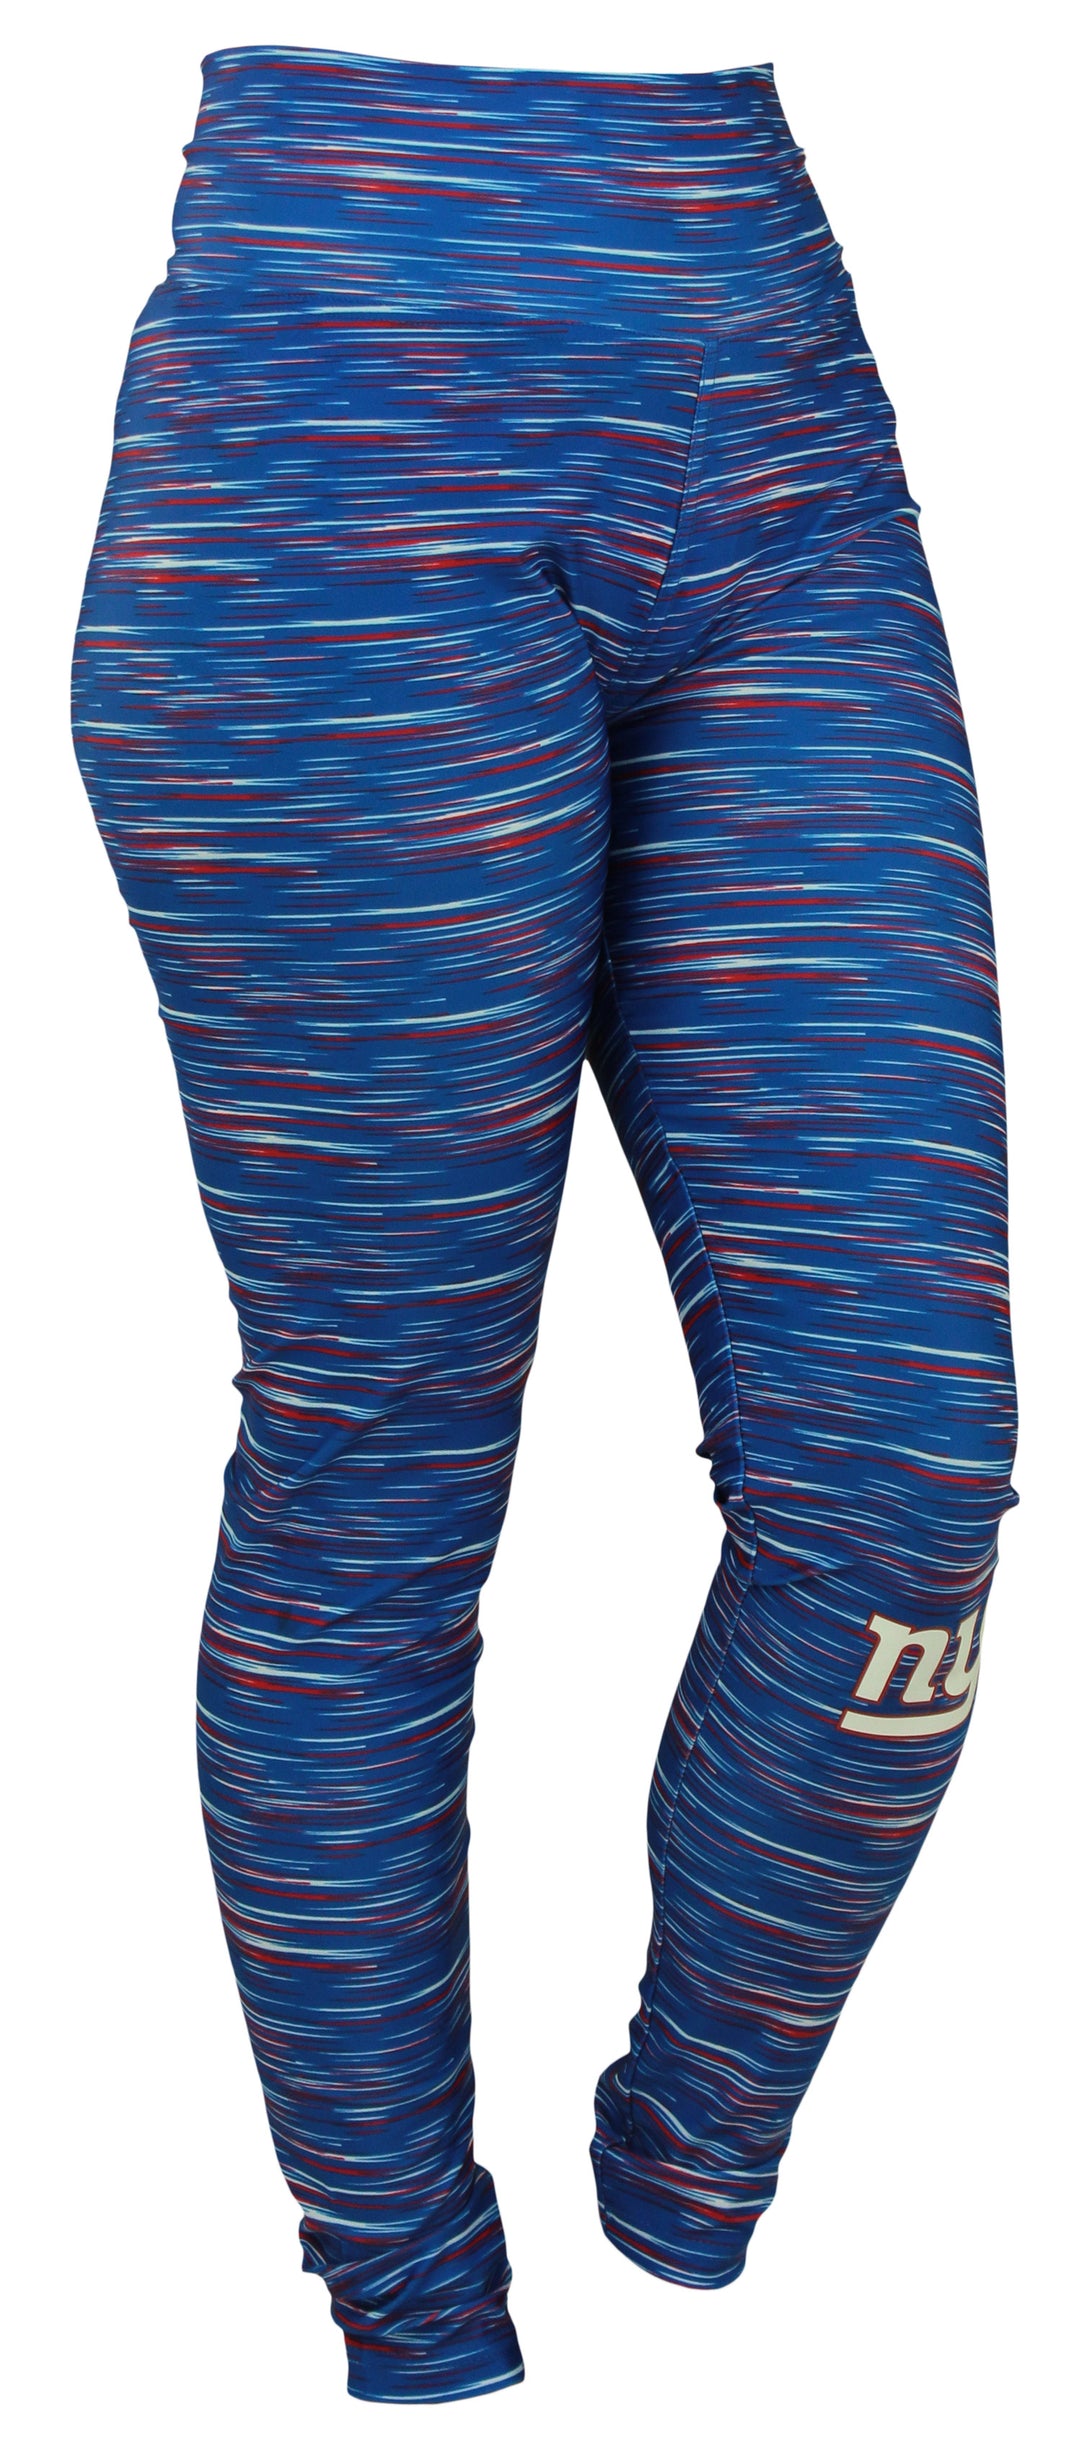 Zubaz NFL Football Women's New York Giants Space Dye Legging